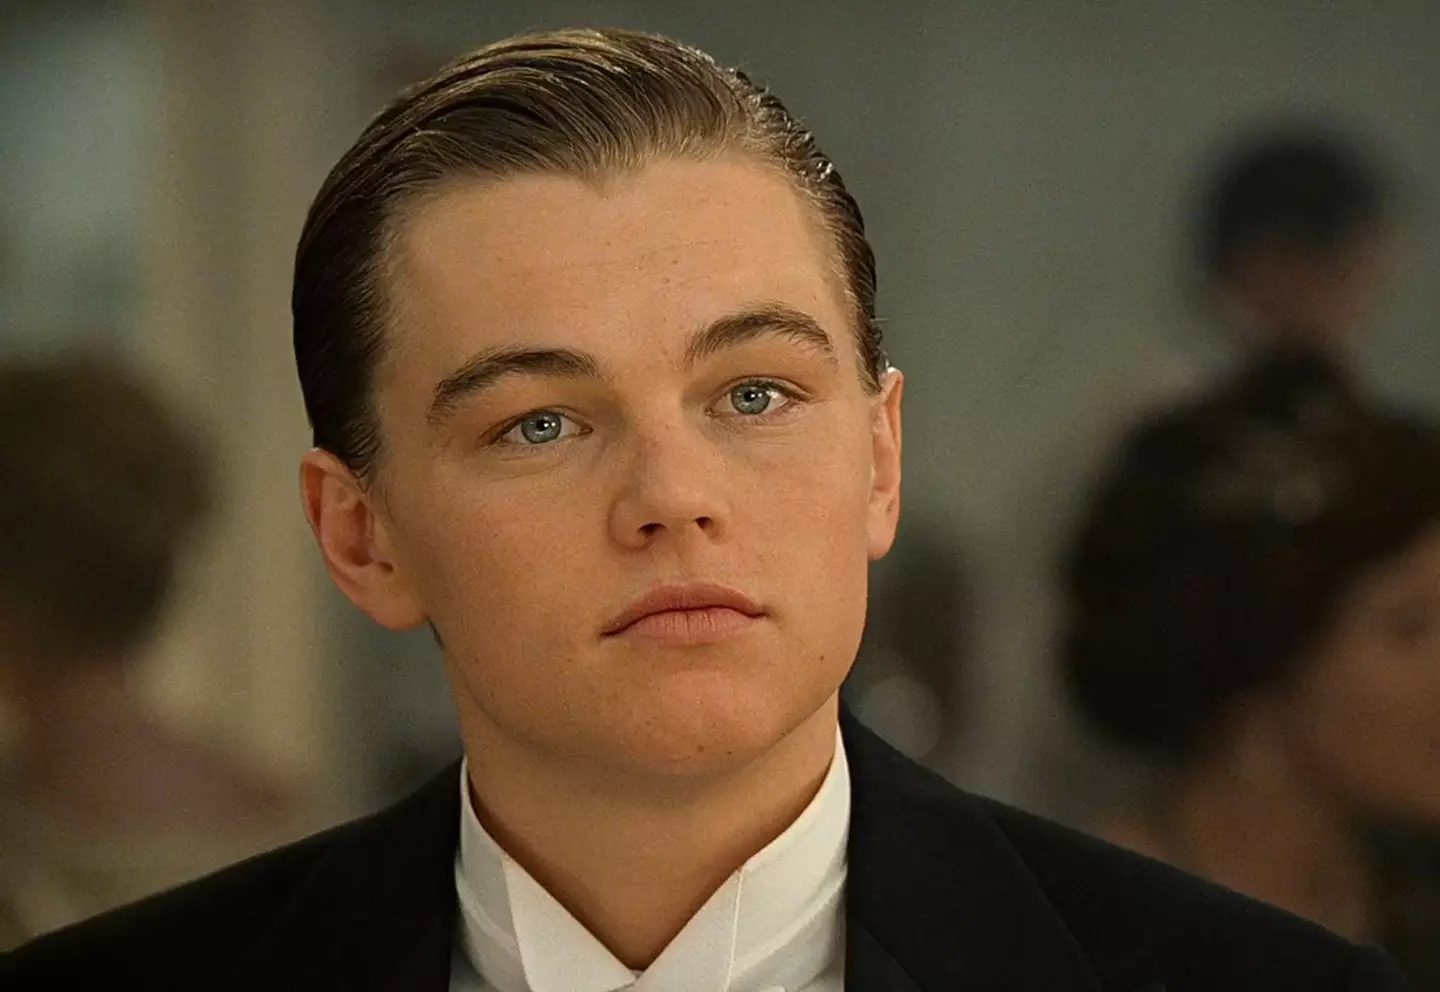 Leonardo DiCaprio's script error in Titanic ended up staying in the film.